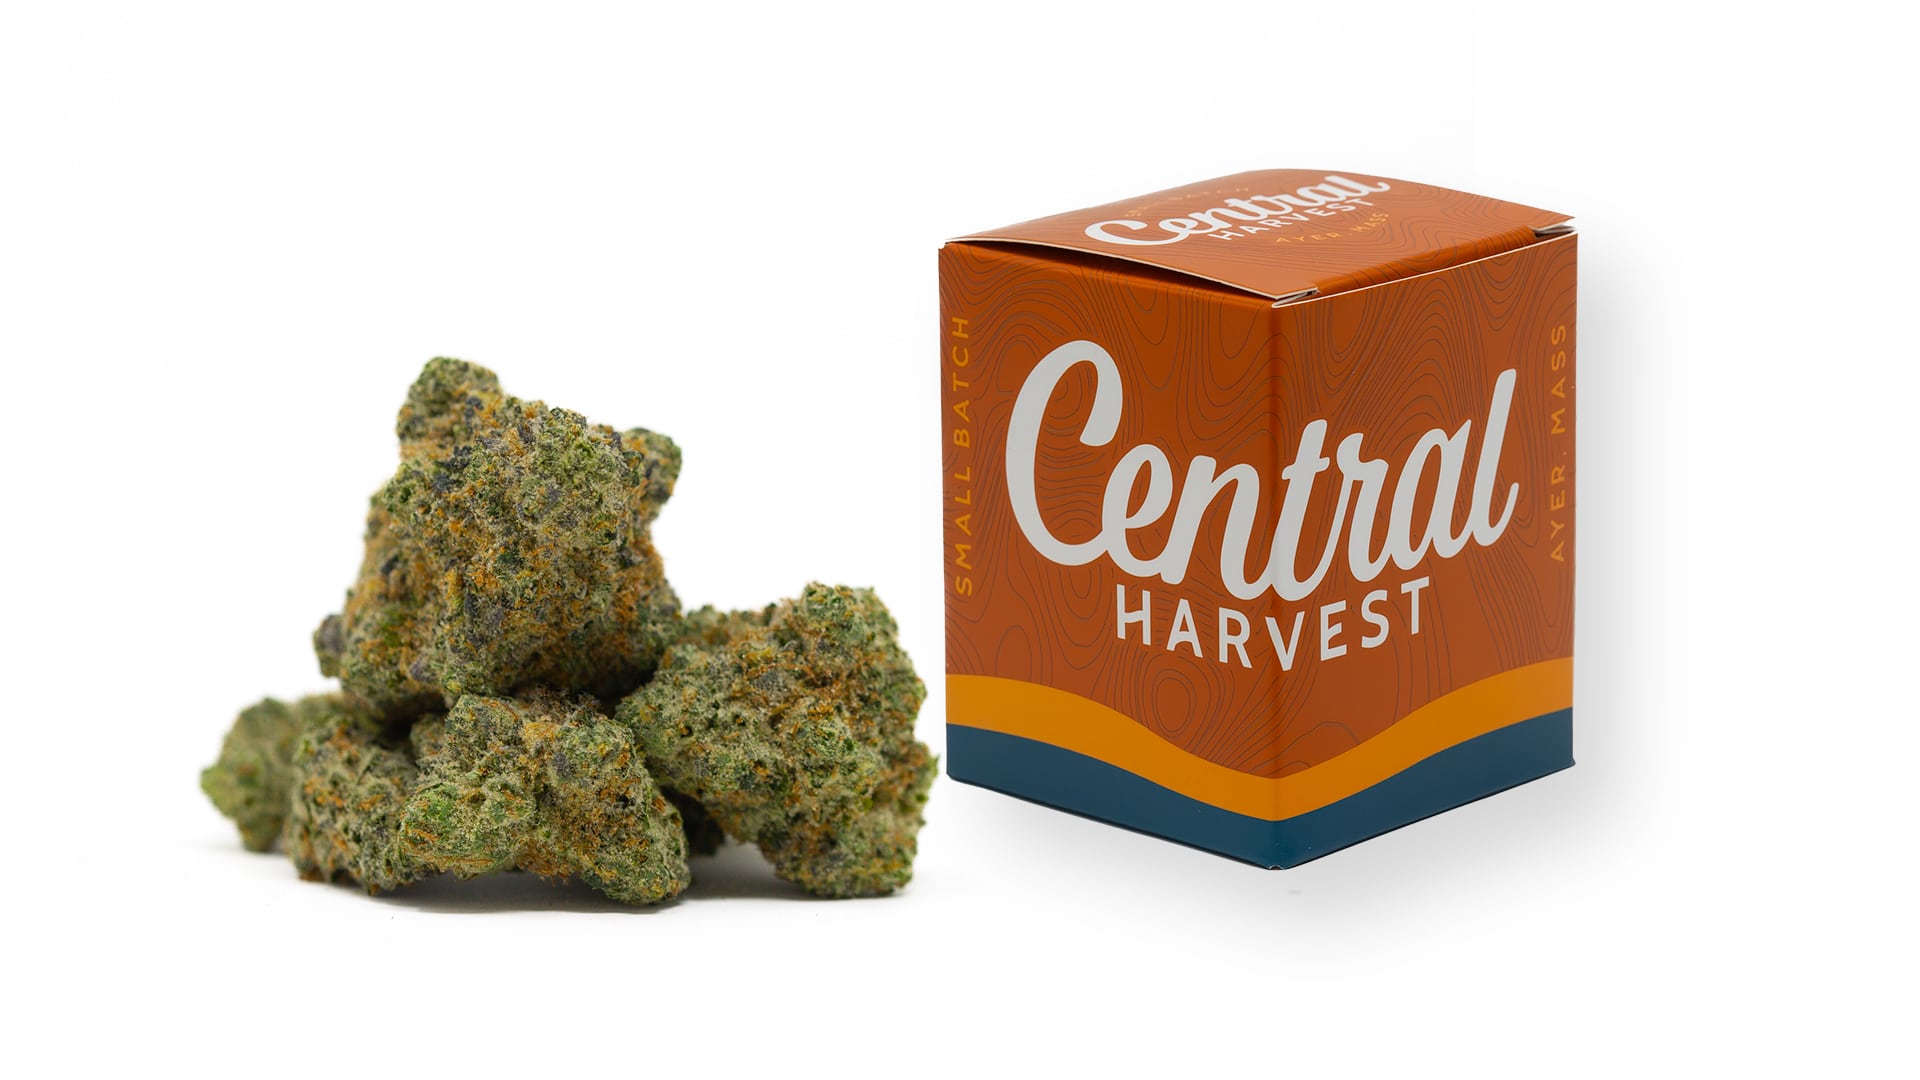 Falcon 9 an Indica Cannabis strain grown by Central Harvest